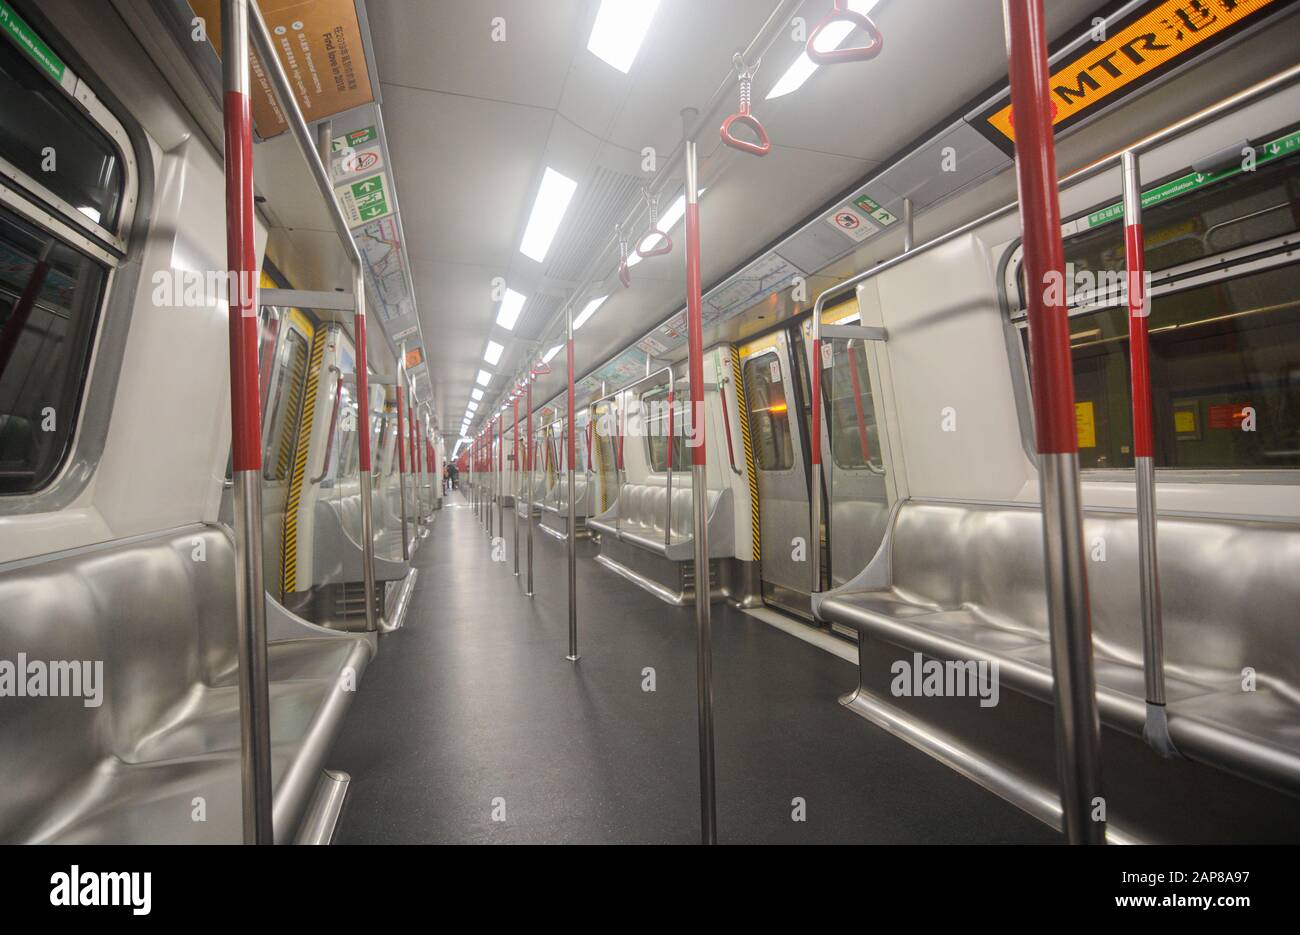 Hongkong, China - 9. März 2019 - Interieur eines meist leeren MTR-Zugwagens in Hongkong Stockfoto